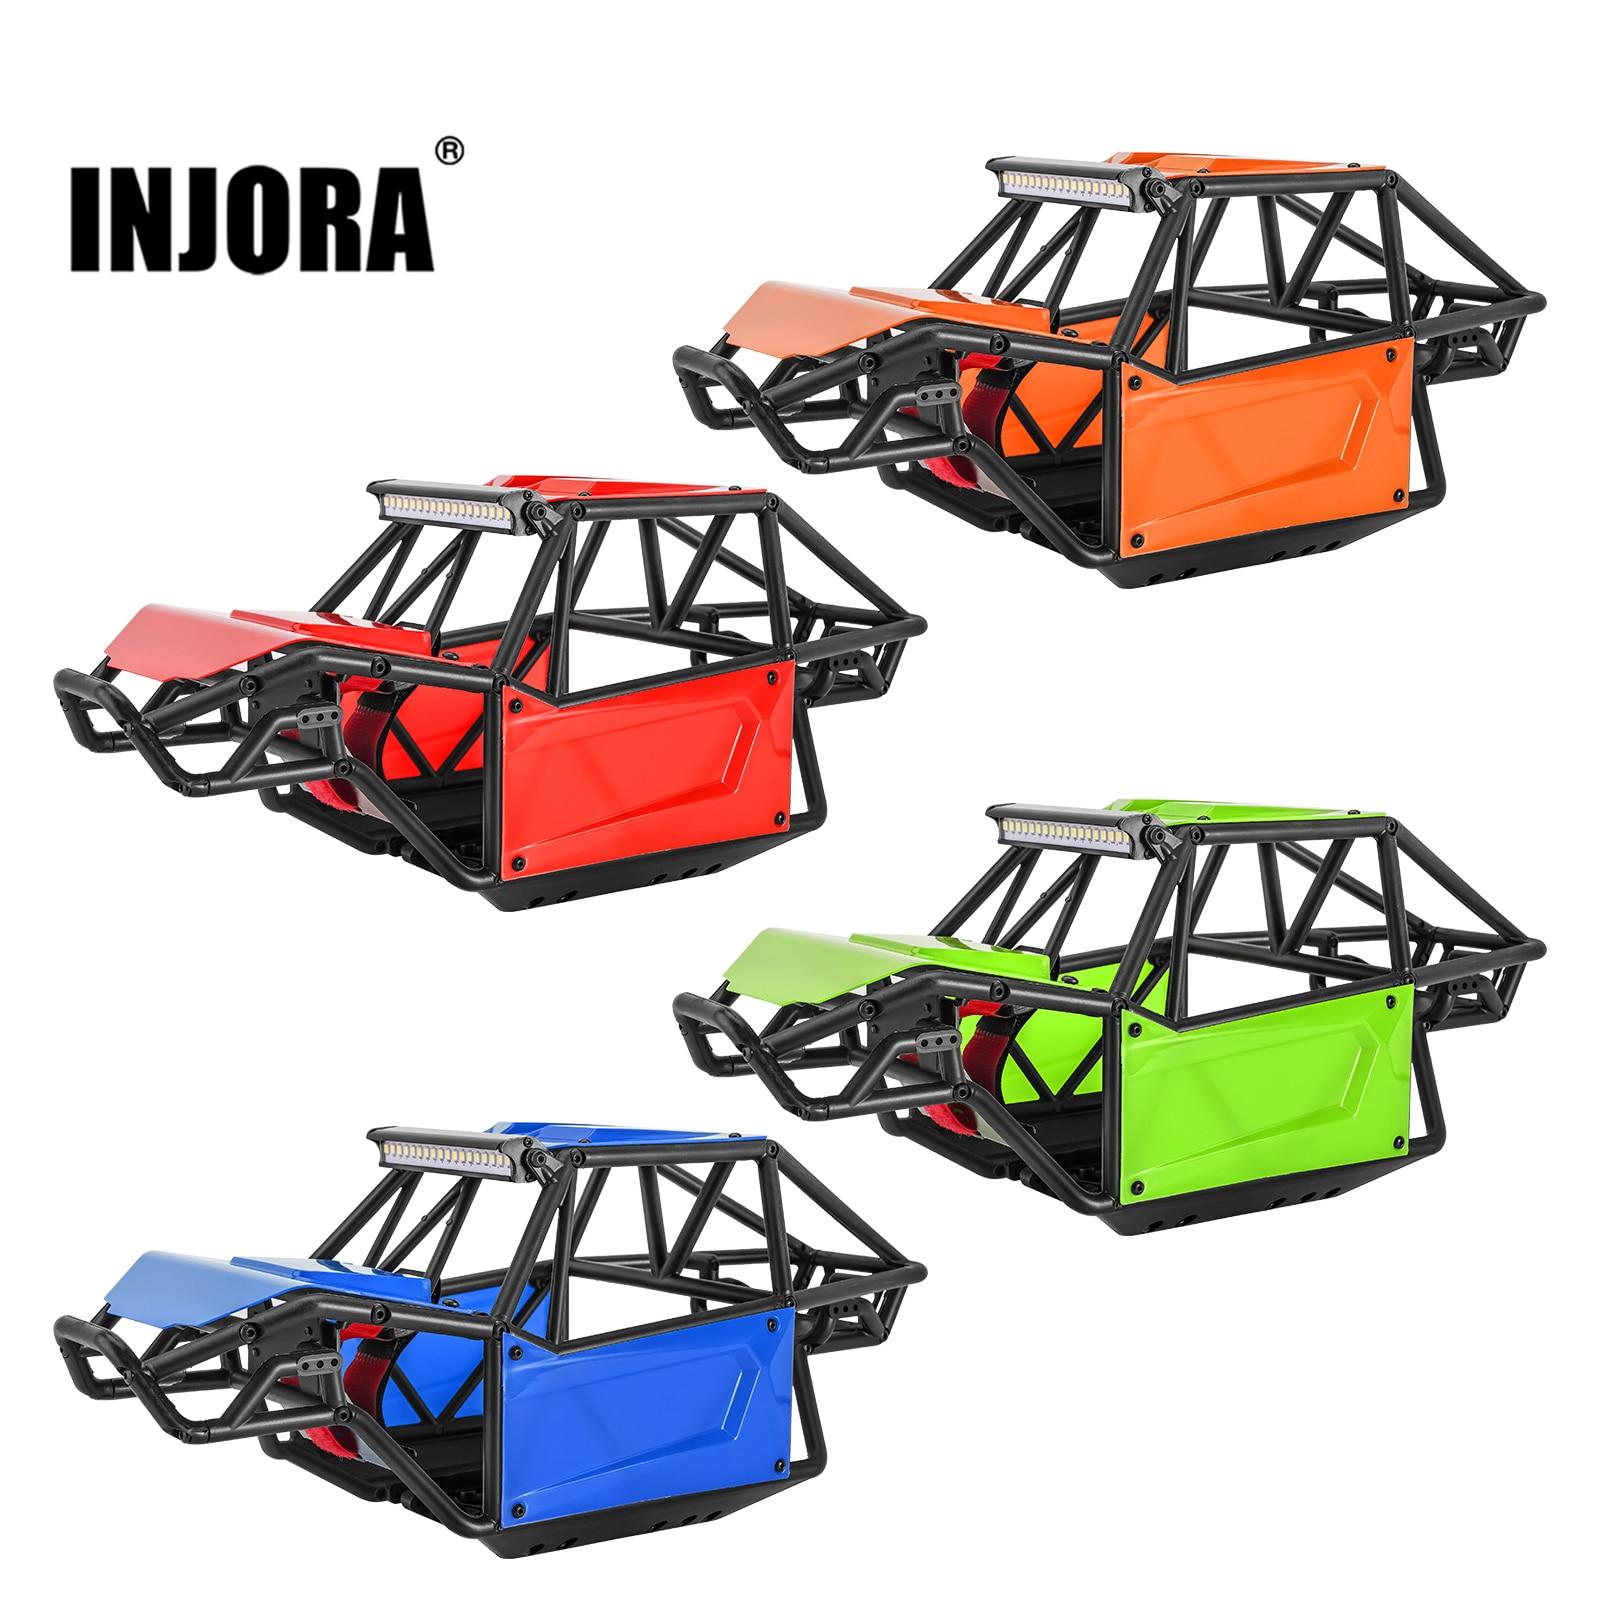 INJORA-Nylon-Rock-Buggy-Body-Shell-Chassis-Kit-for-1-10-RC-Crawler-Car-Axial-SCX10.jpg